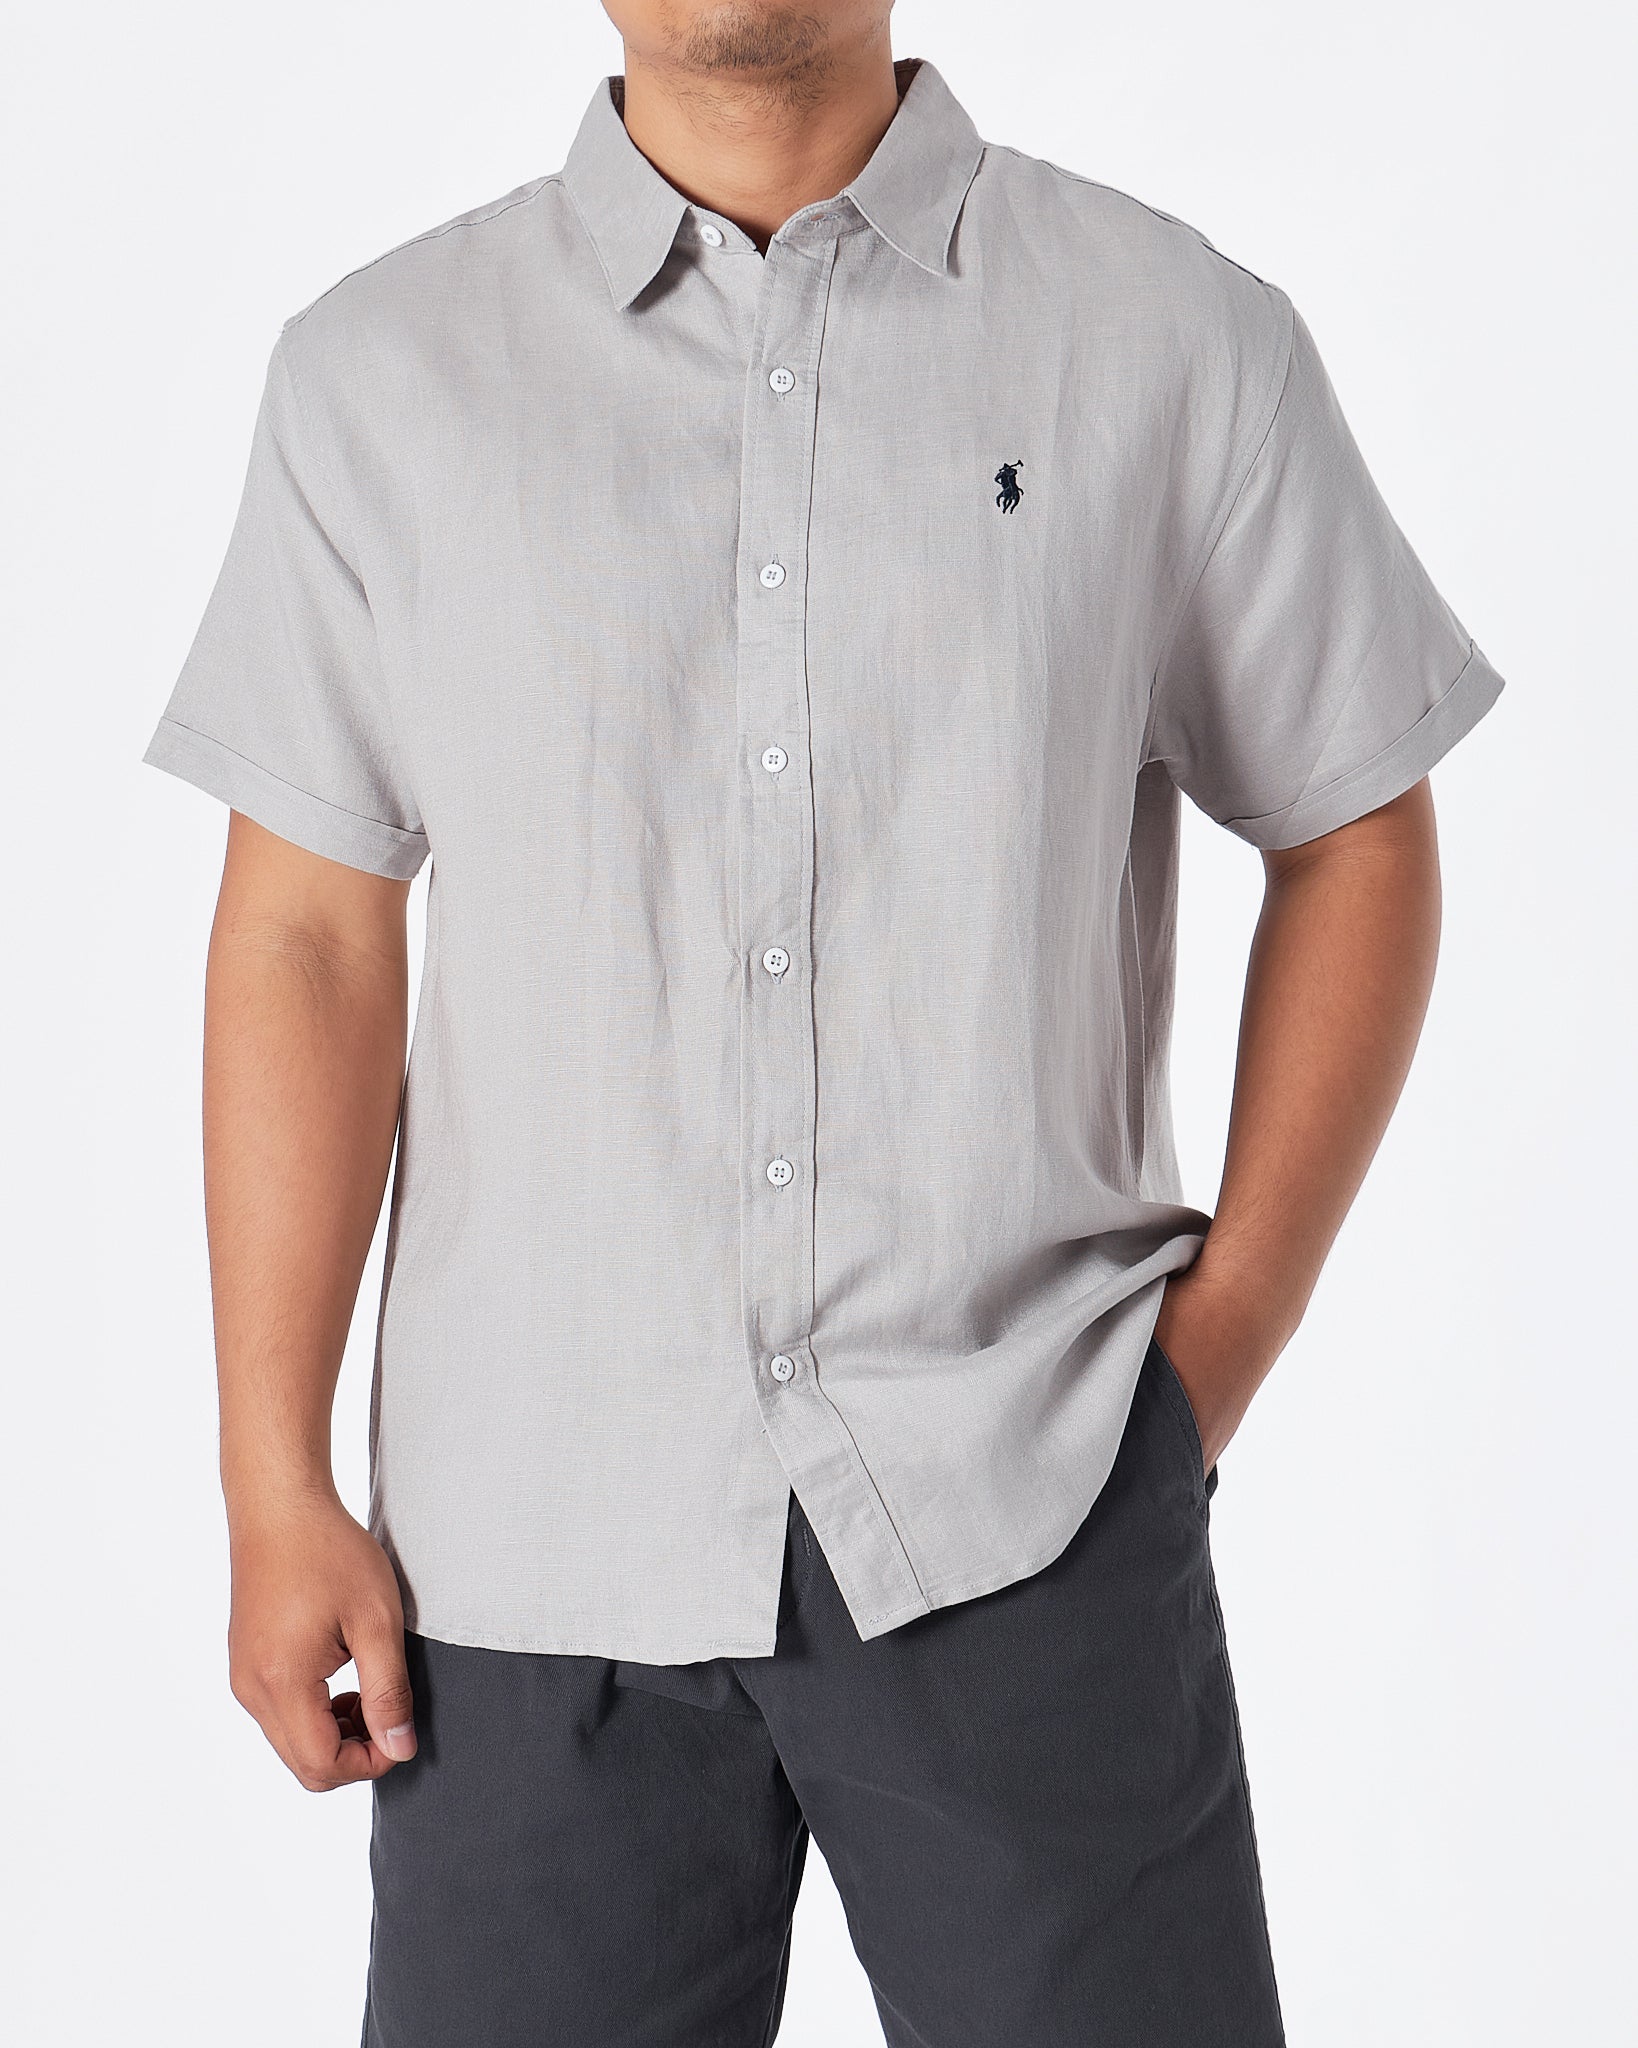 MOI OUTFIT-RL Cotton Men Grey Shirts Short Sleeve 28.90